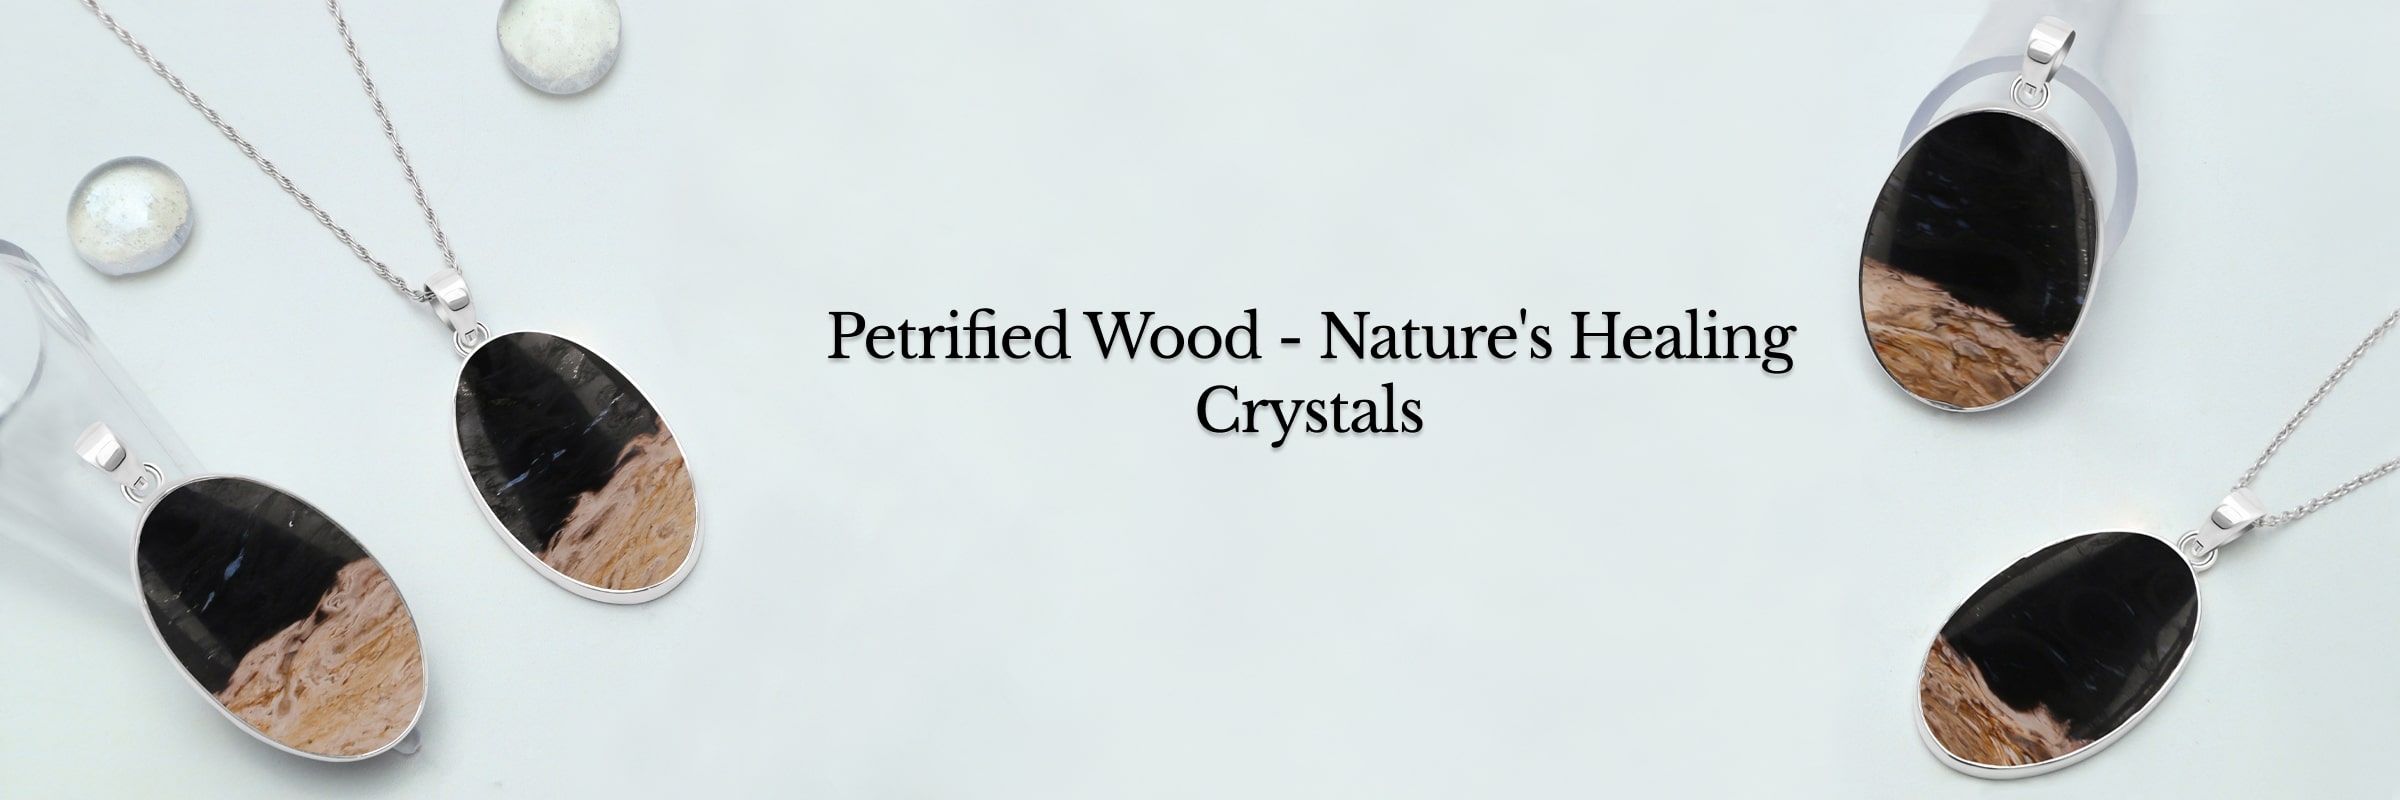 Healing Properties of Petrified Wood Crystal